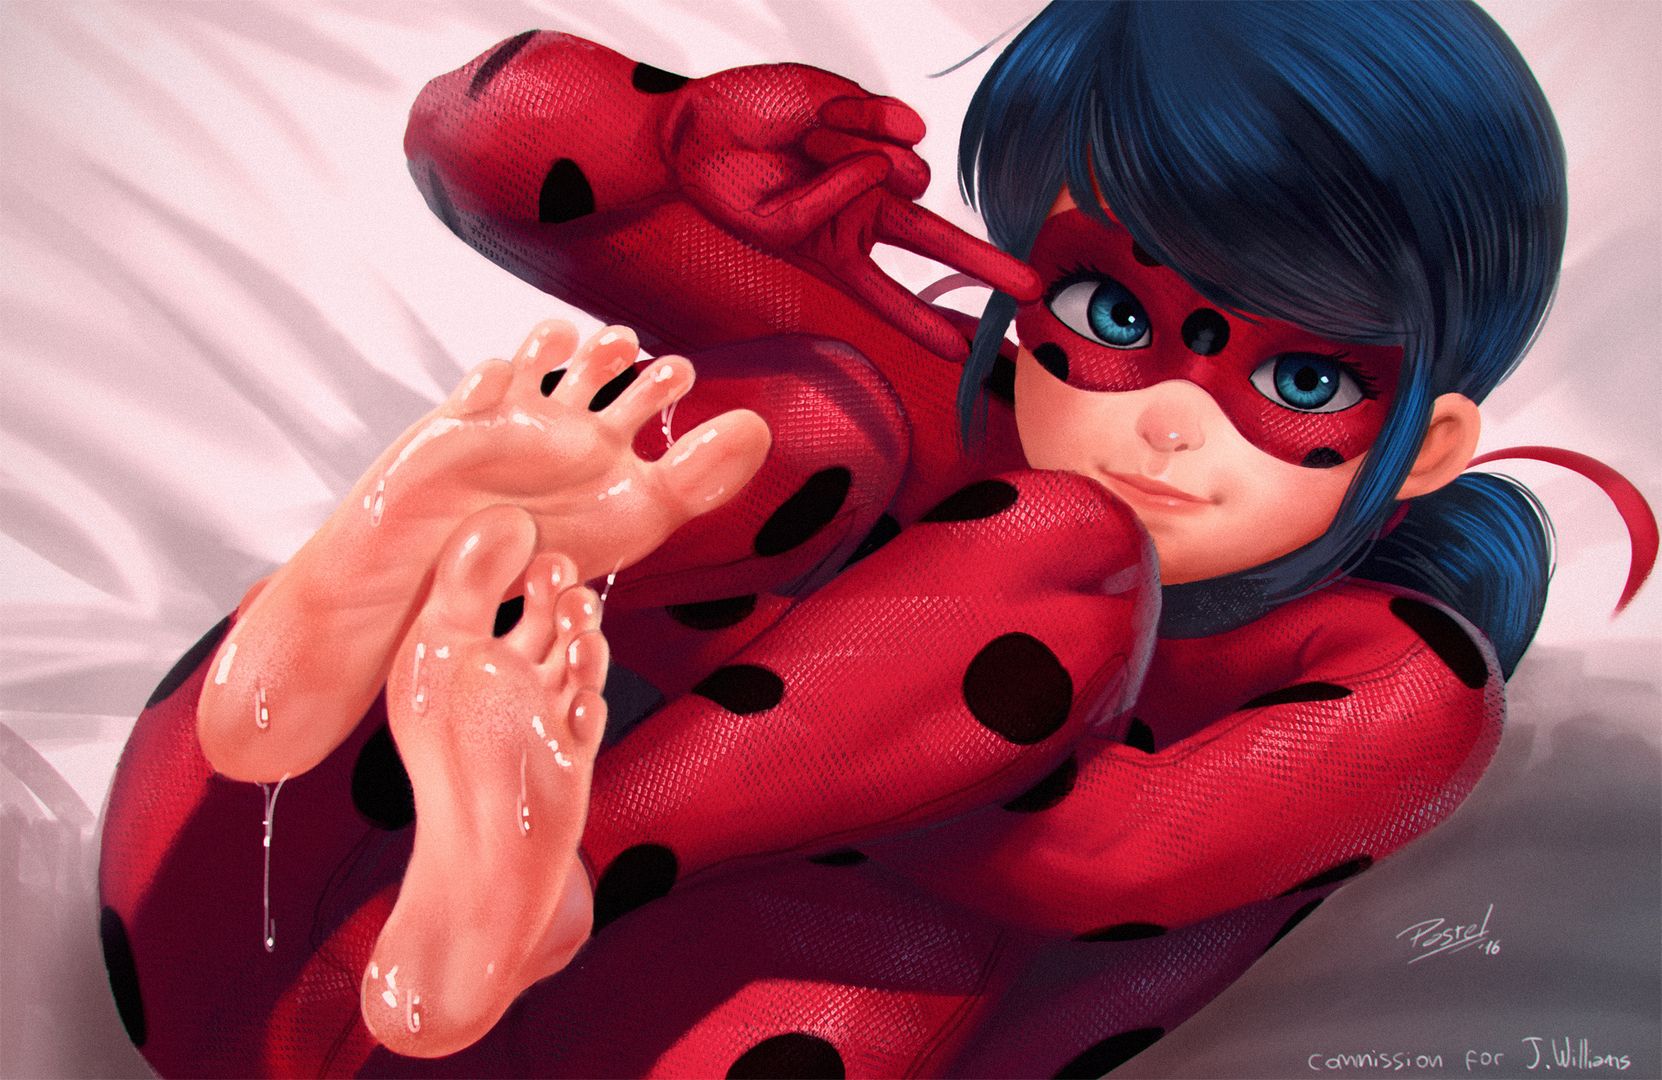 Marinette/Ladybug feet is something I need in my life.